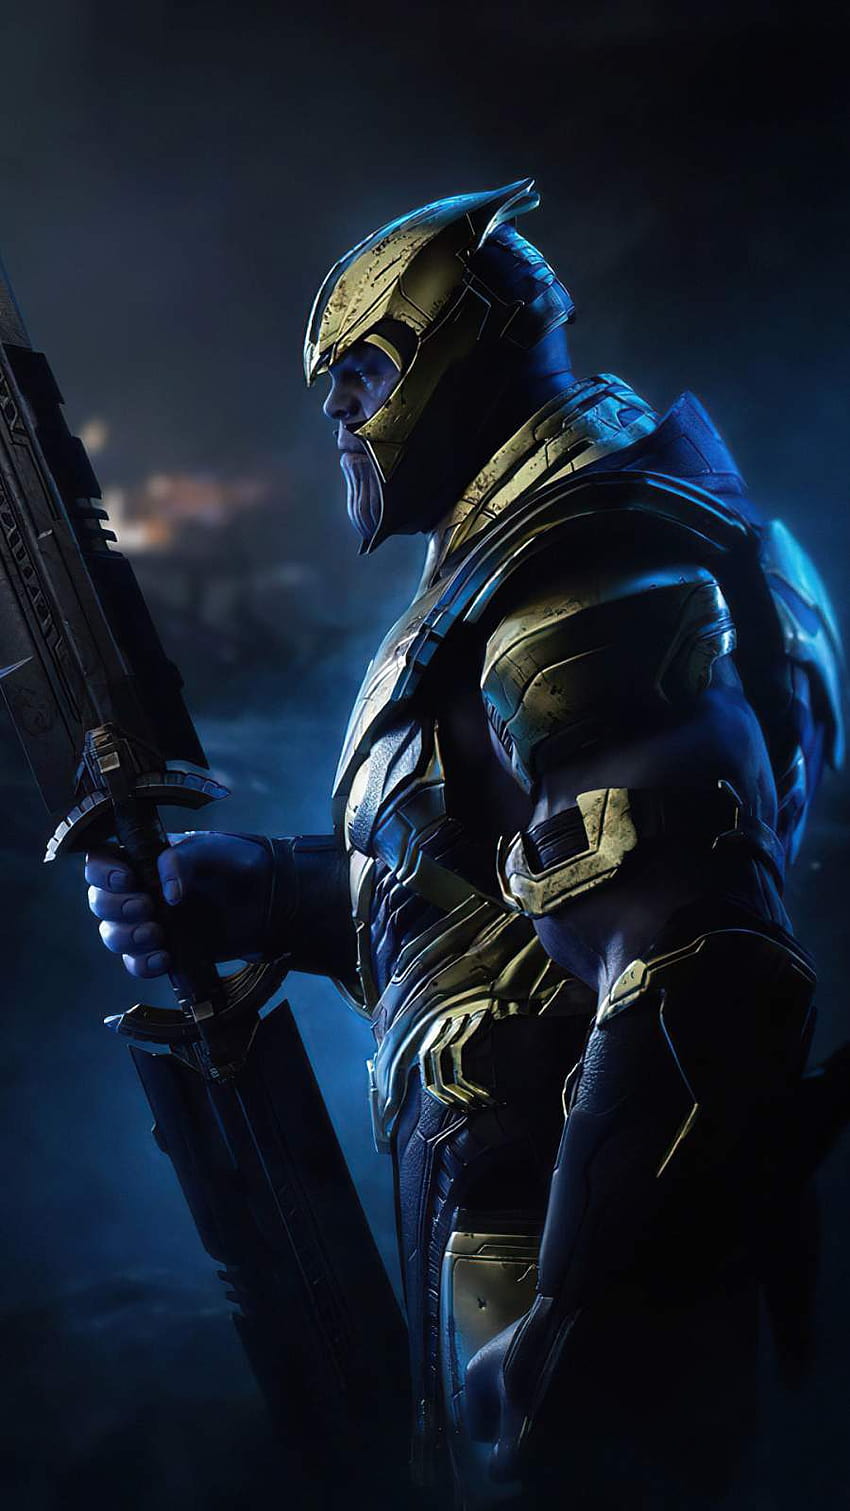 Thanos Avengers Infinity War fan art wallpaper background  plingcom